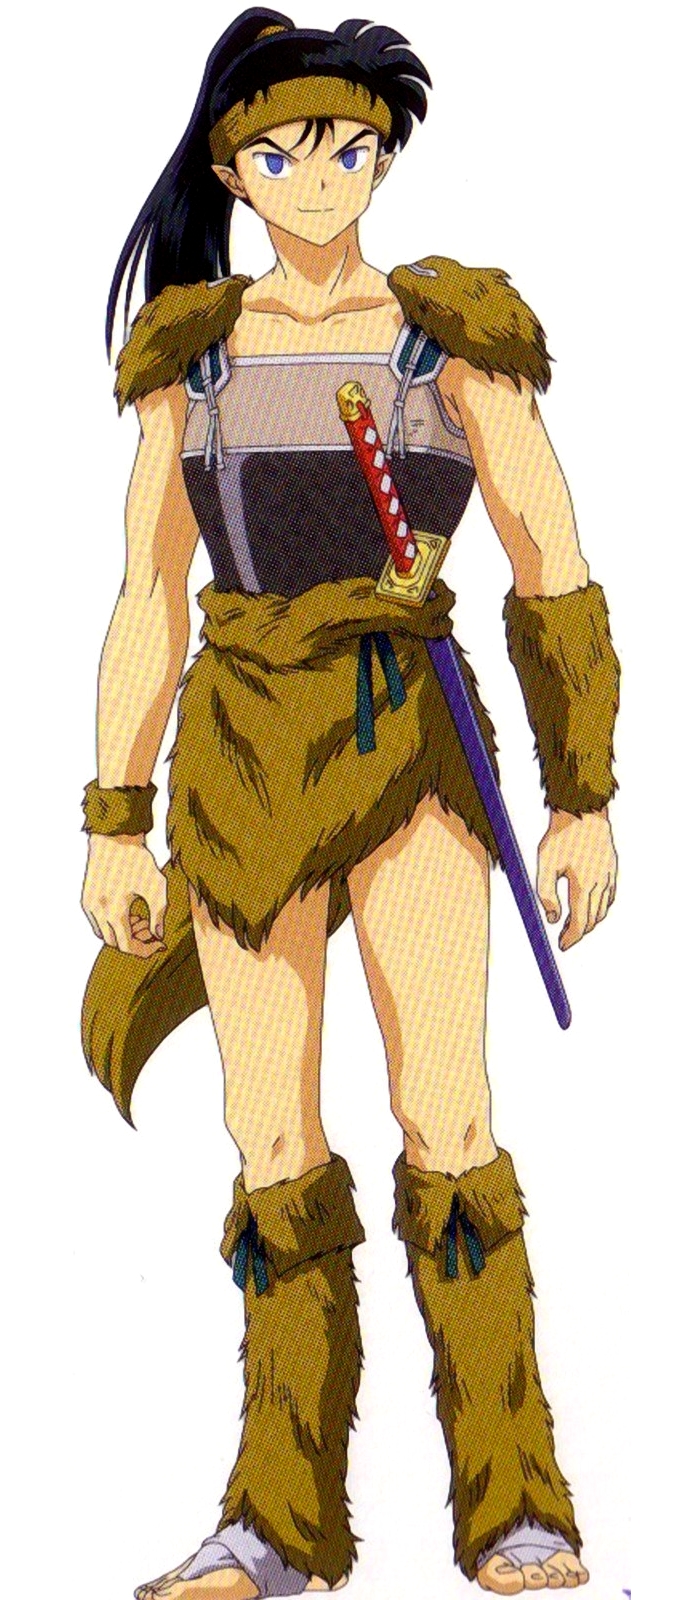 Inuyasha (character) - Wikipedia